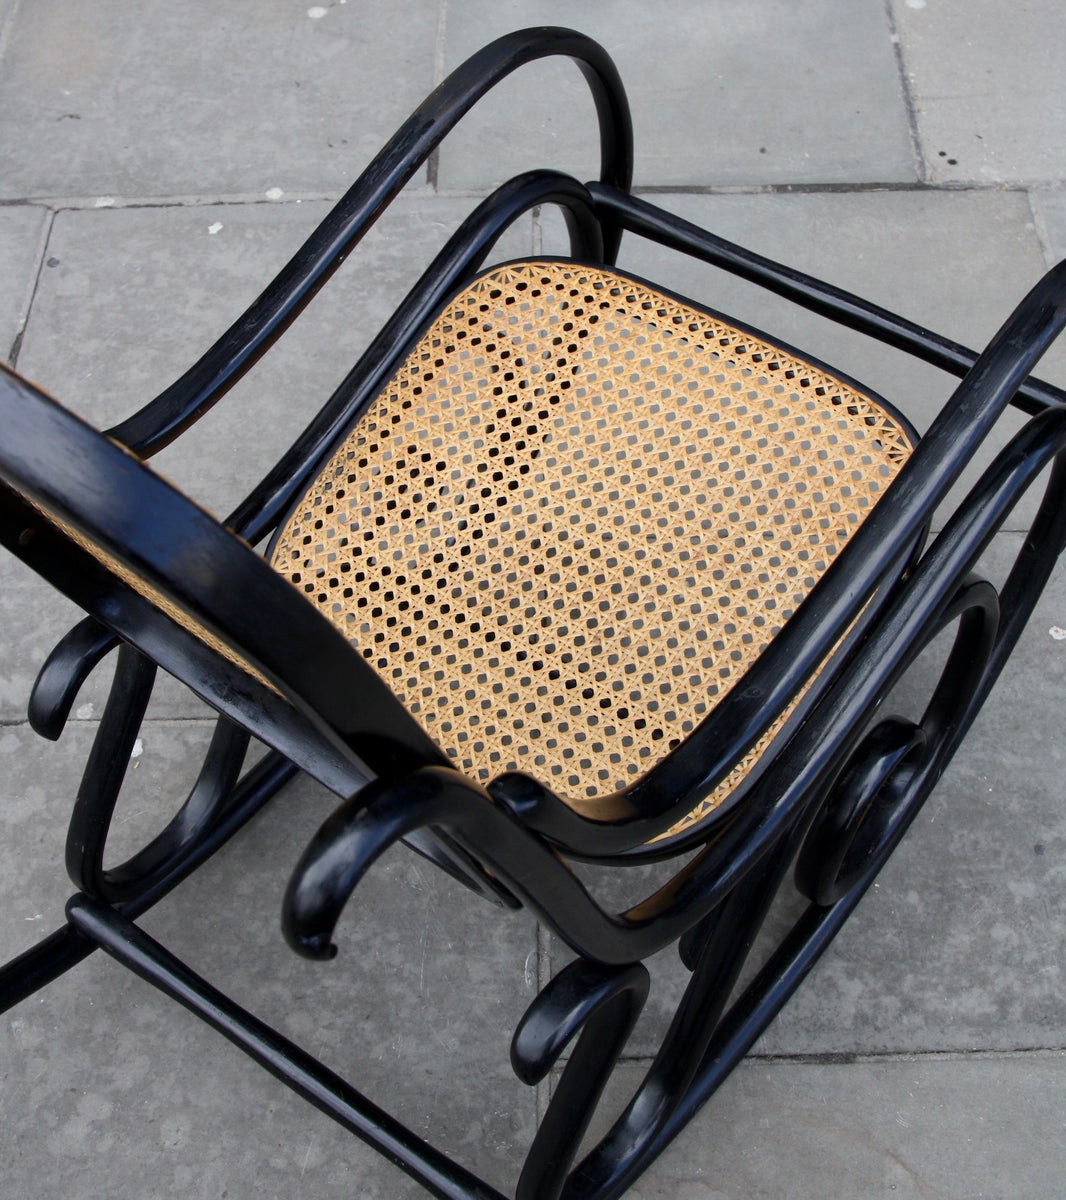 No*10 Rocking Chair  Michael Thonet - Image 10